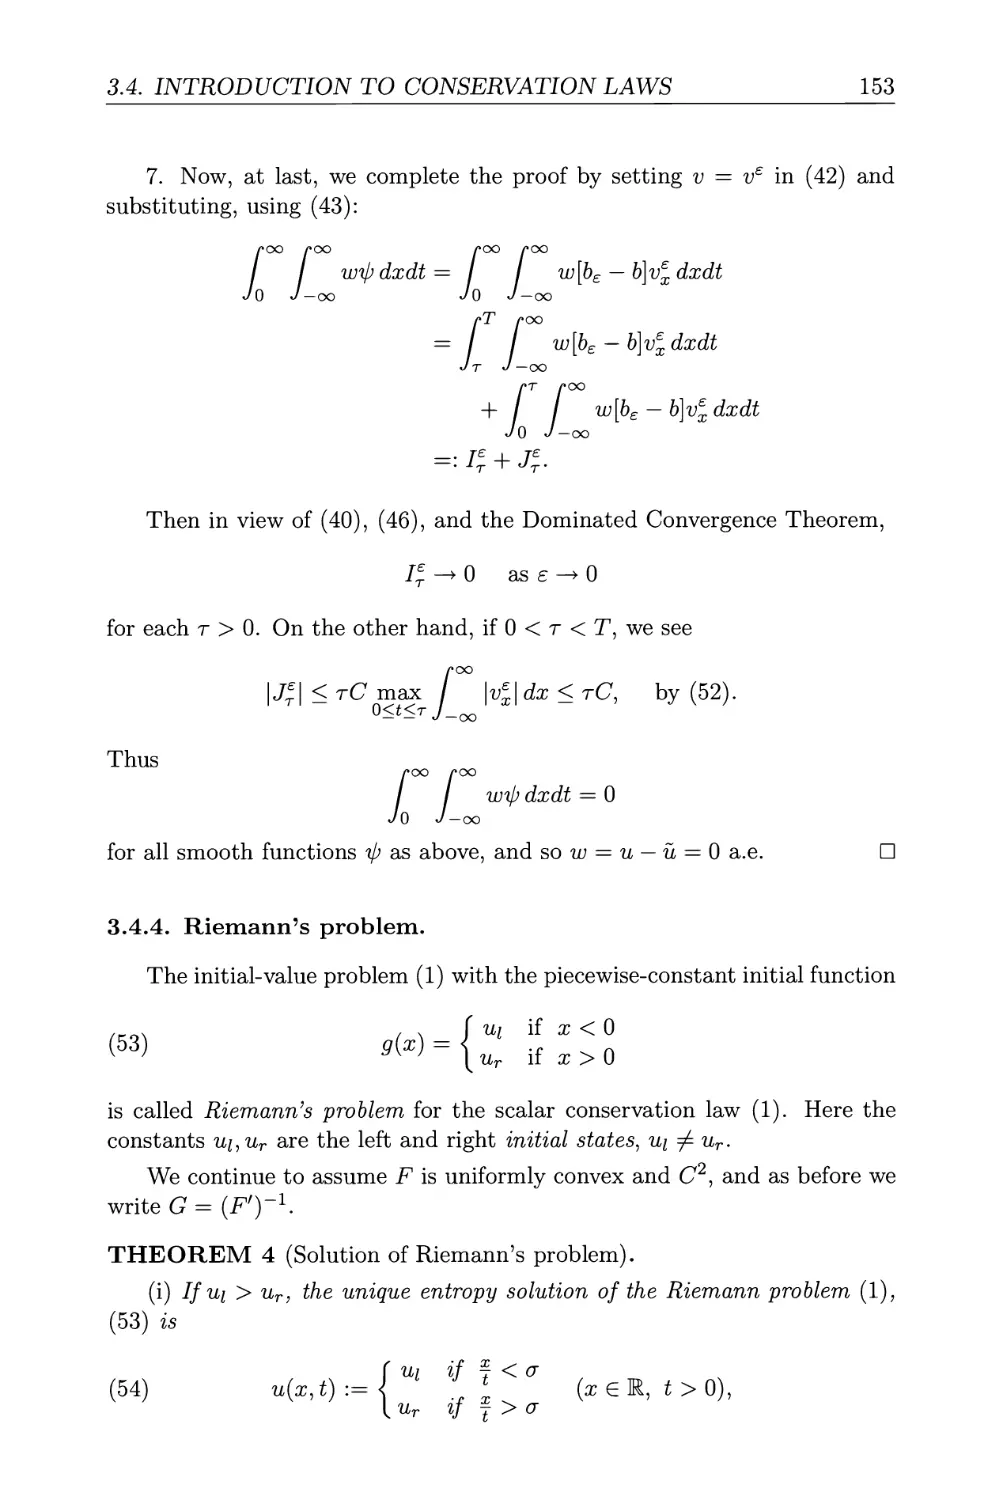 3.4.4. Riemann's problem